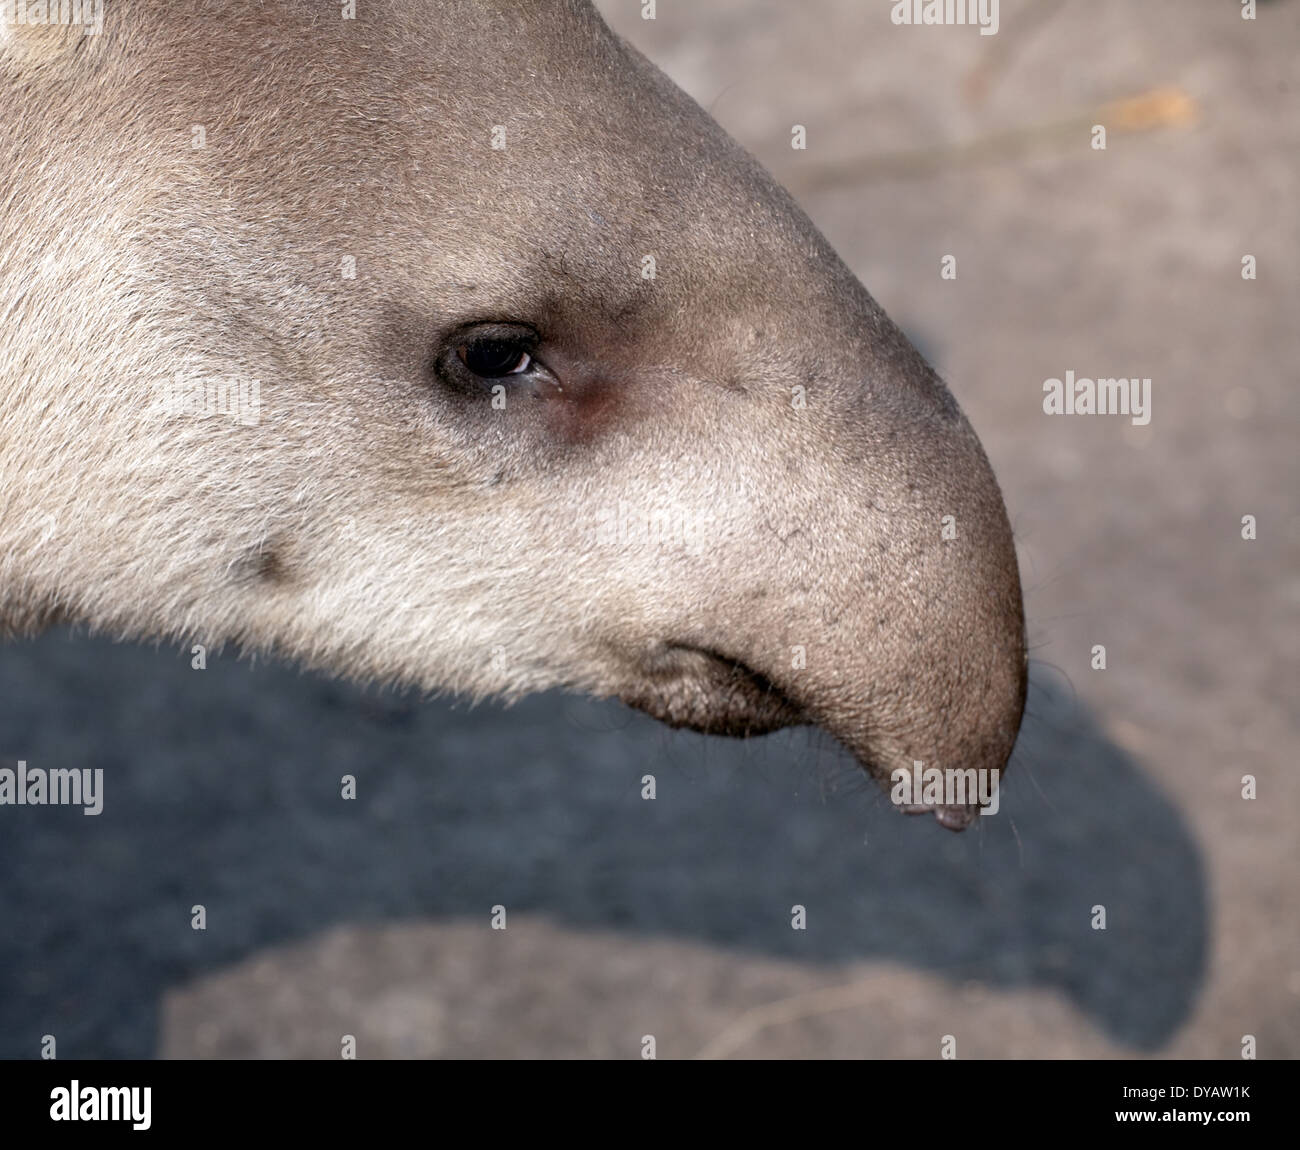 Hocico de tapir closeup retrato con gracioso perfil de la nariz Foto de stock